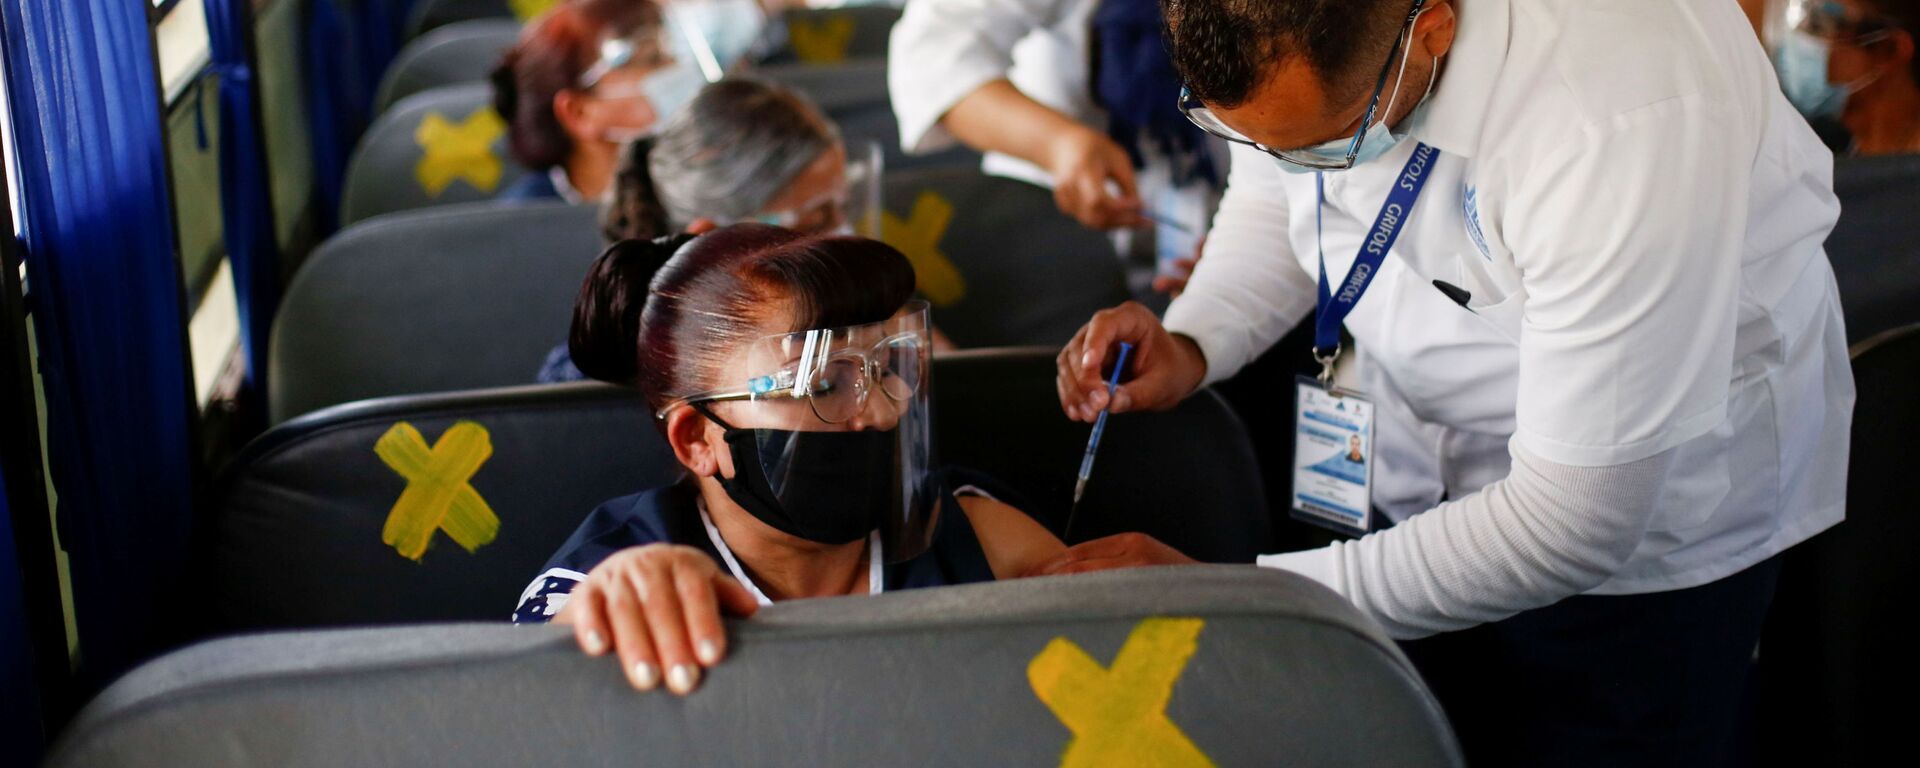 Сотрудники получают дозу вакцины от коронавируса Pfizer-BioNTech (COVID-19) в автобусе в Сьюдад-Хуарес, Мексика - Sputnik Молдова, 1920, 05.08.2021